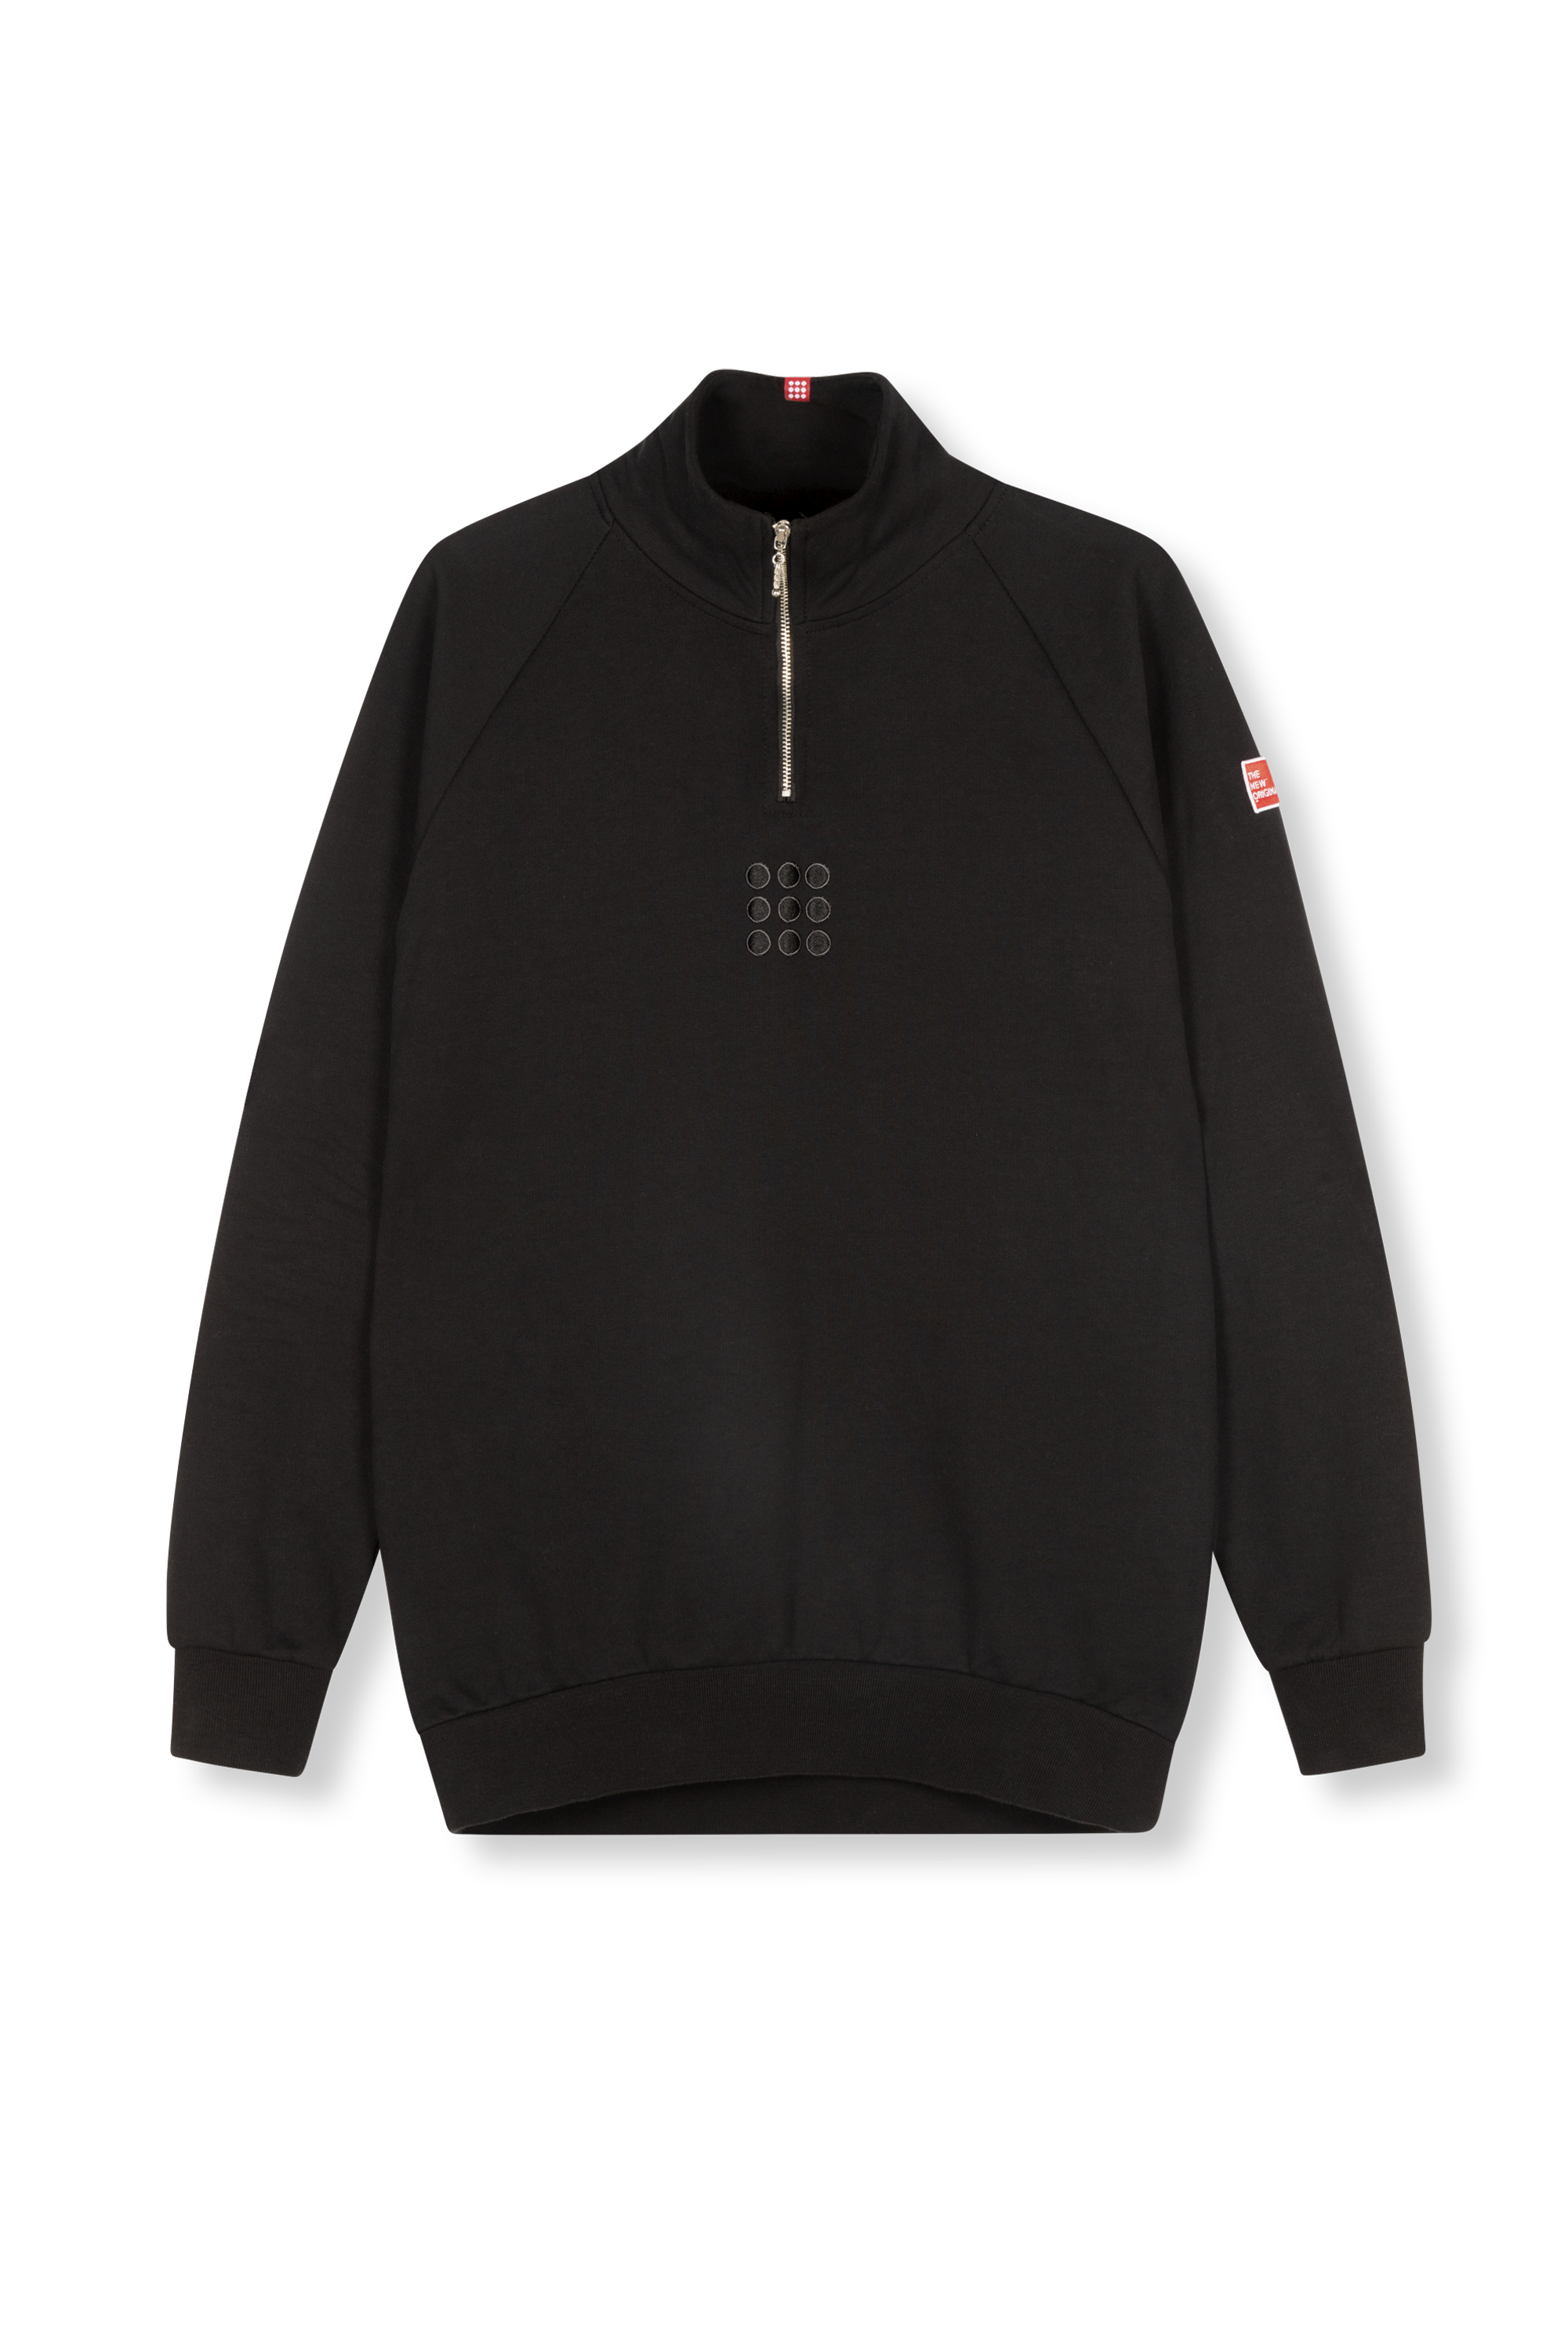 Testudo Sweater 2.0 Black